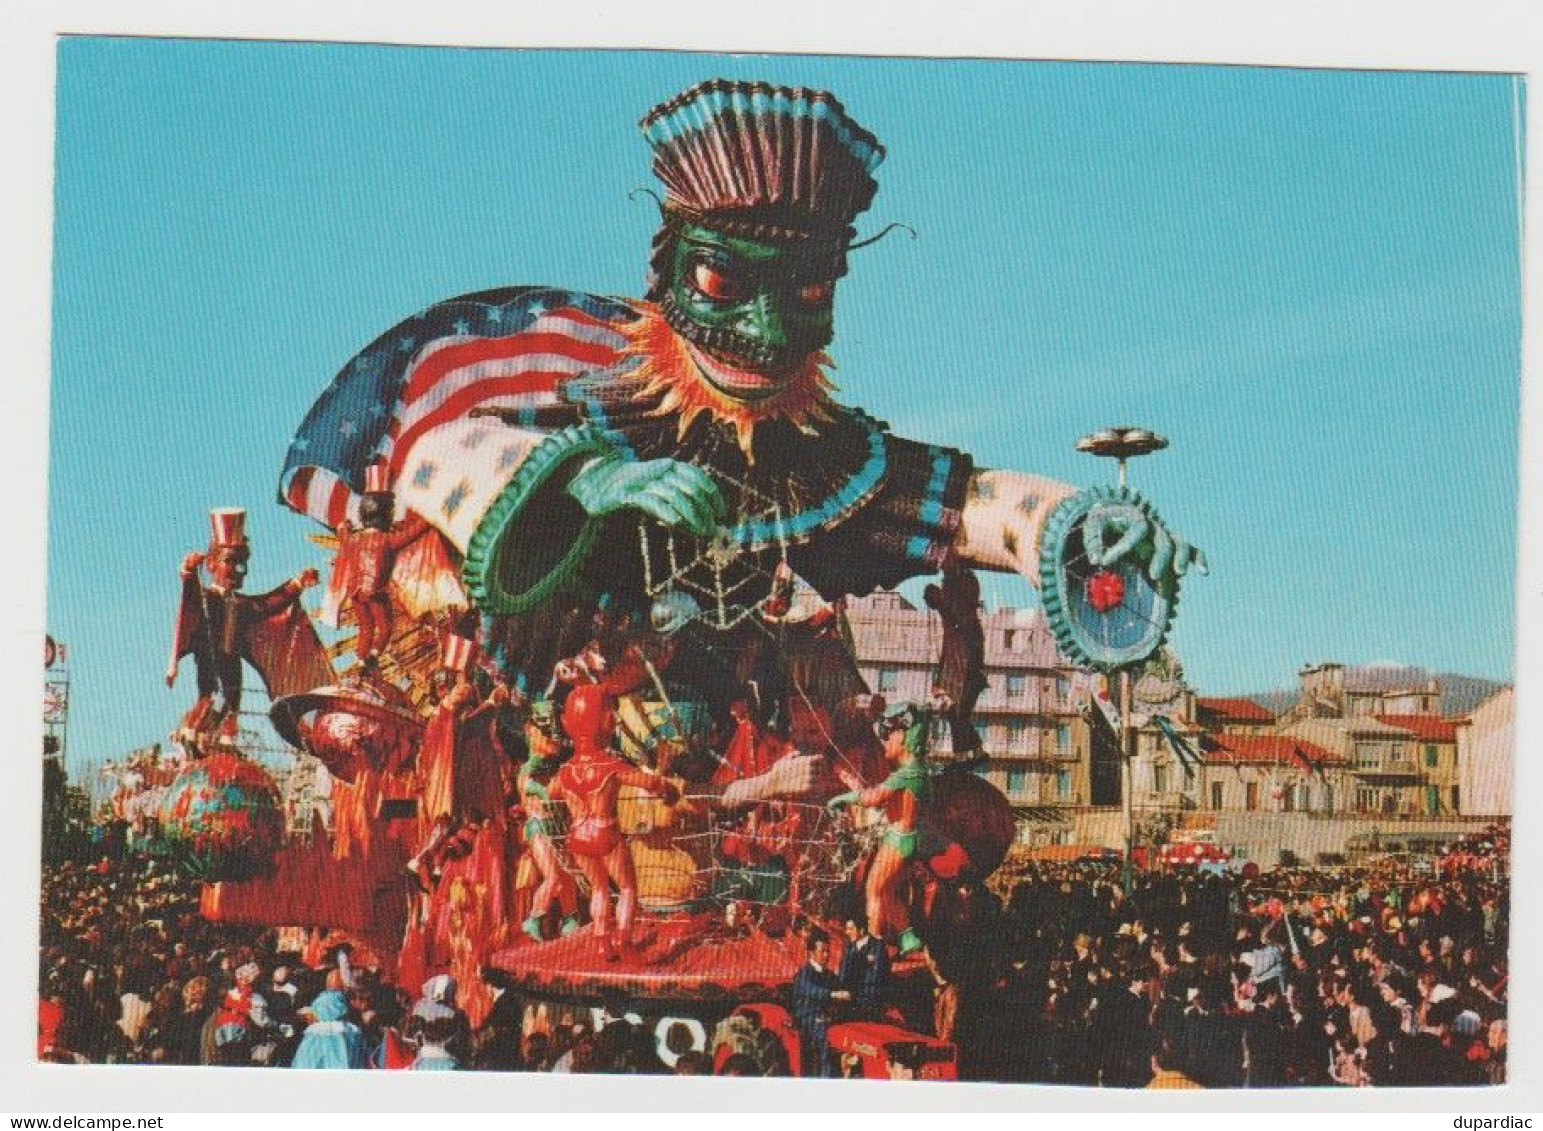 Italie / Carnaval de VIAREGGIO : lot de 38 cartes postales différentes.